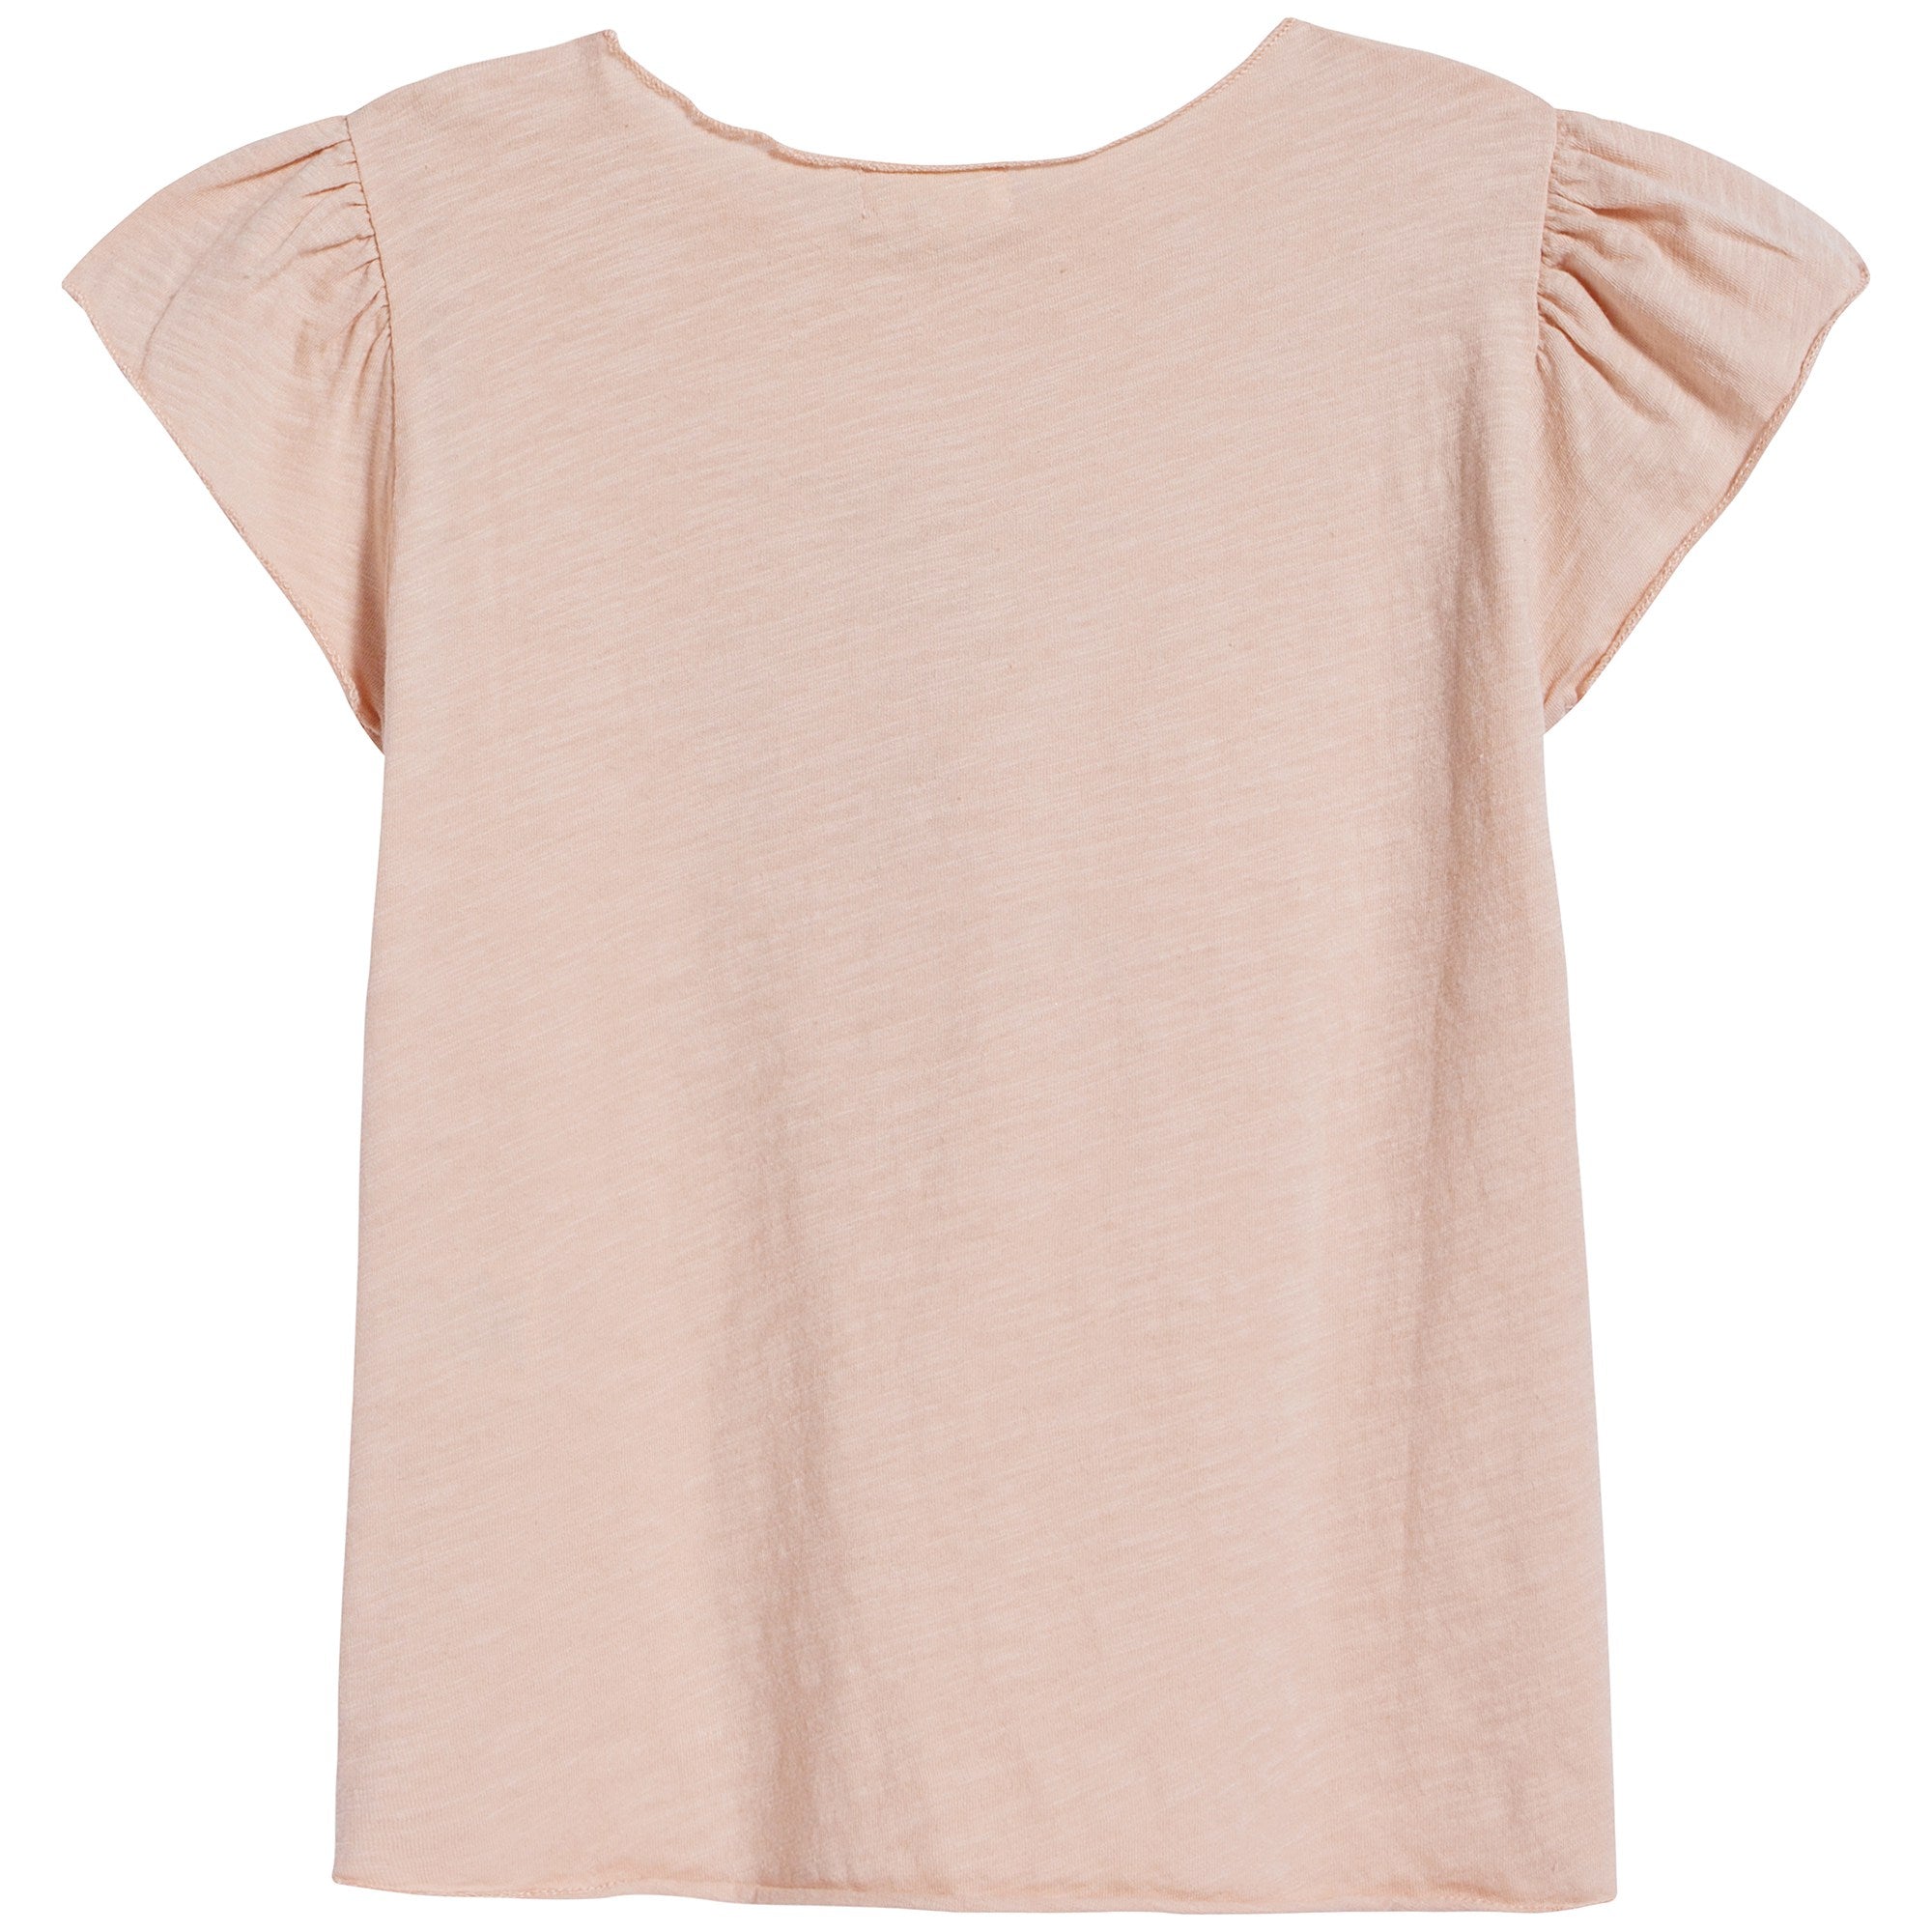 Girls Light Pink Printing Cotton T-shirt